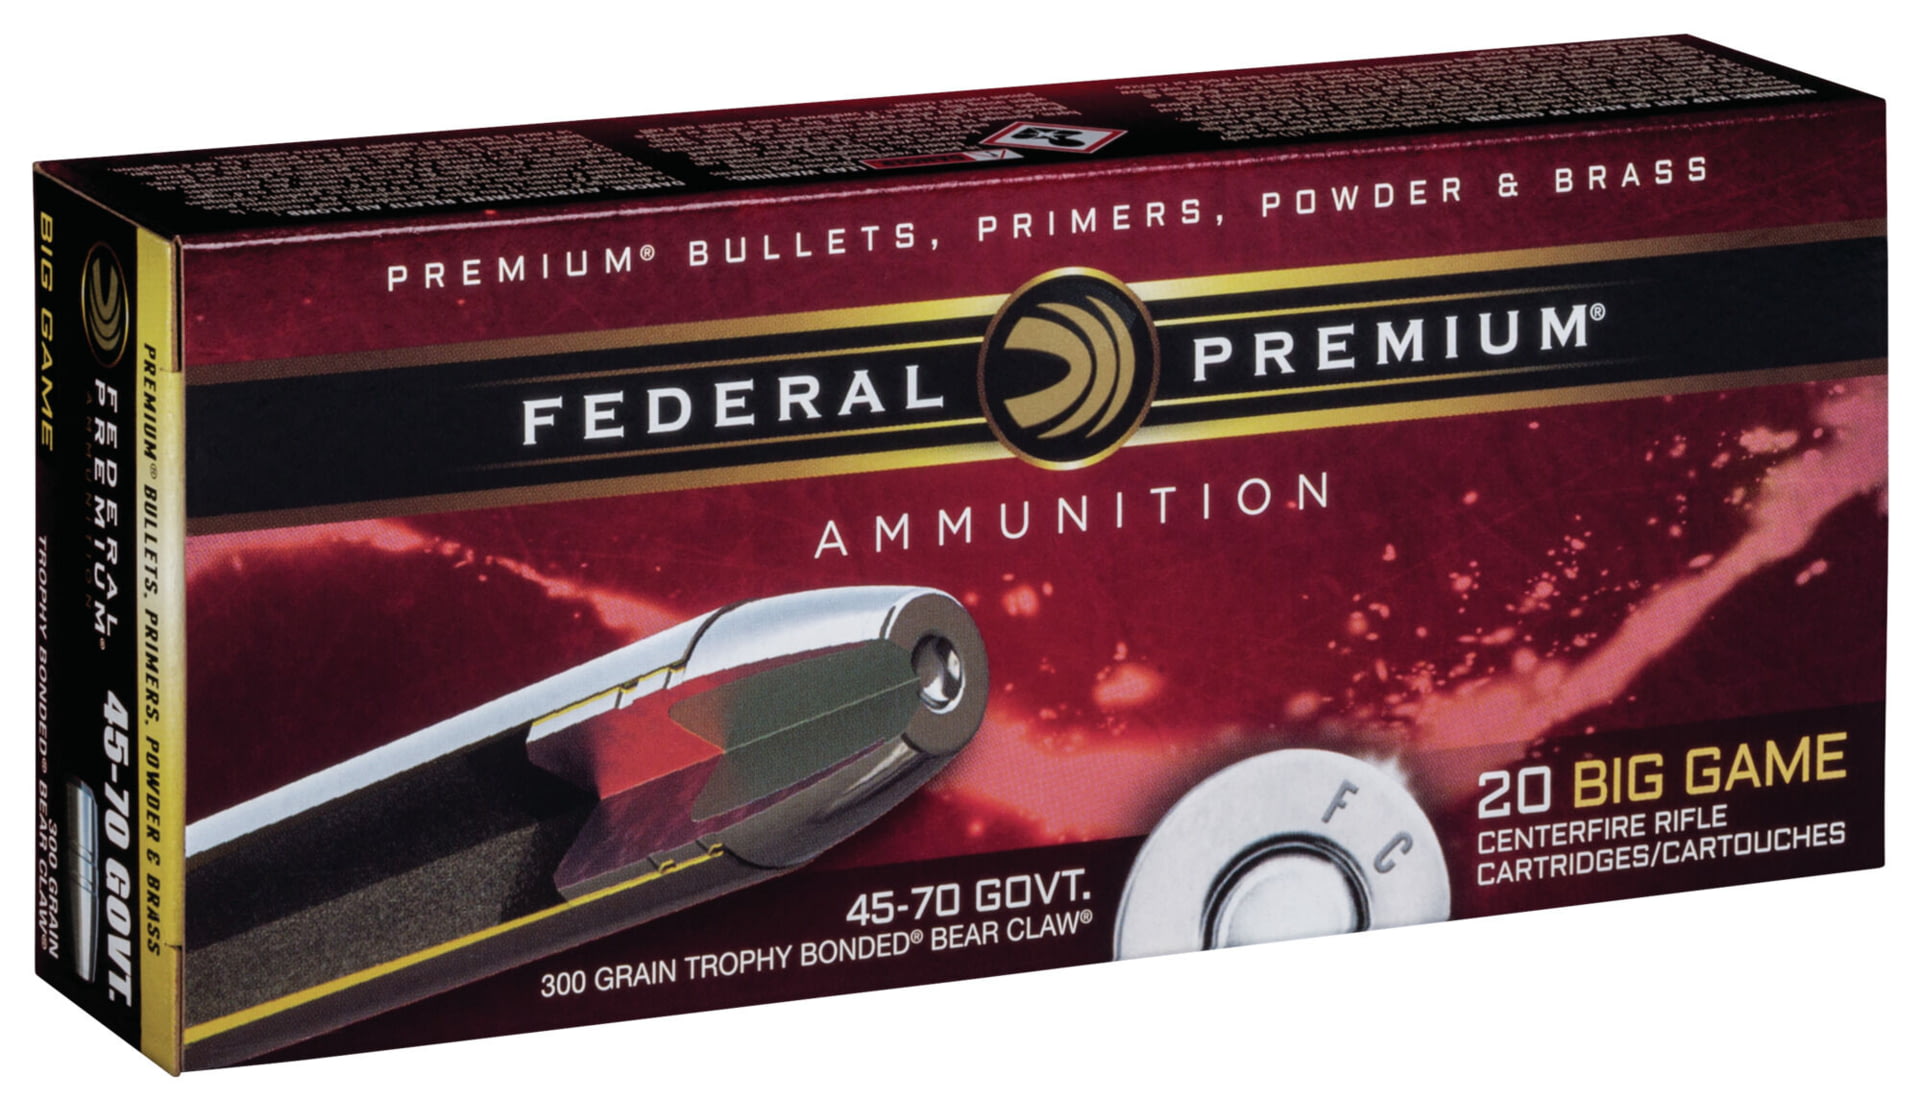 Federal Premium VITAL-SHOK .45-70 Government 300 grain Trophy Bonded Bear Claw Centerfire Rifle Ammunition